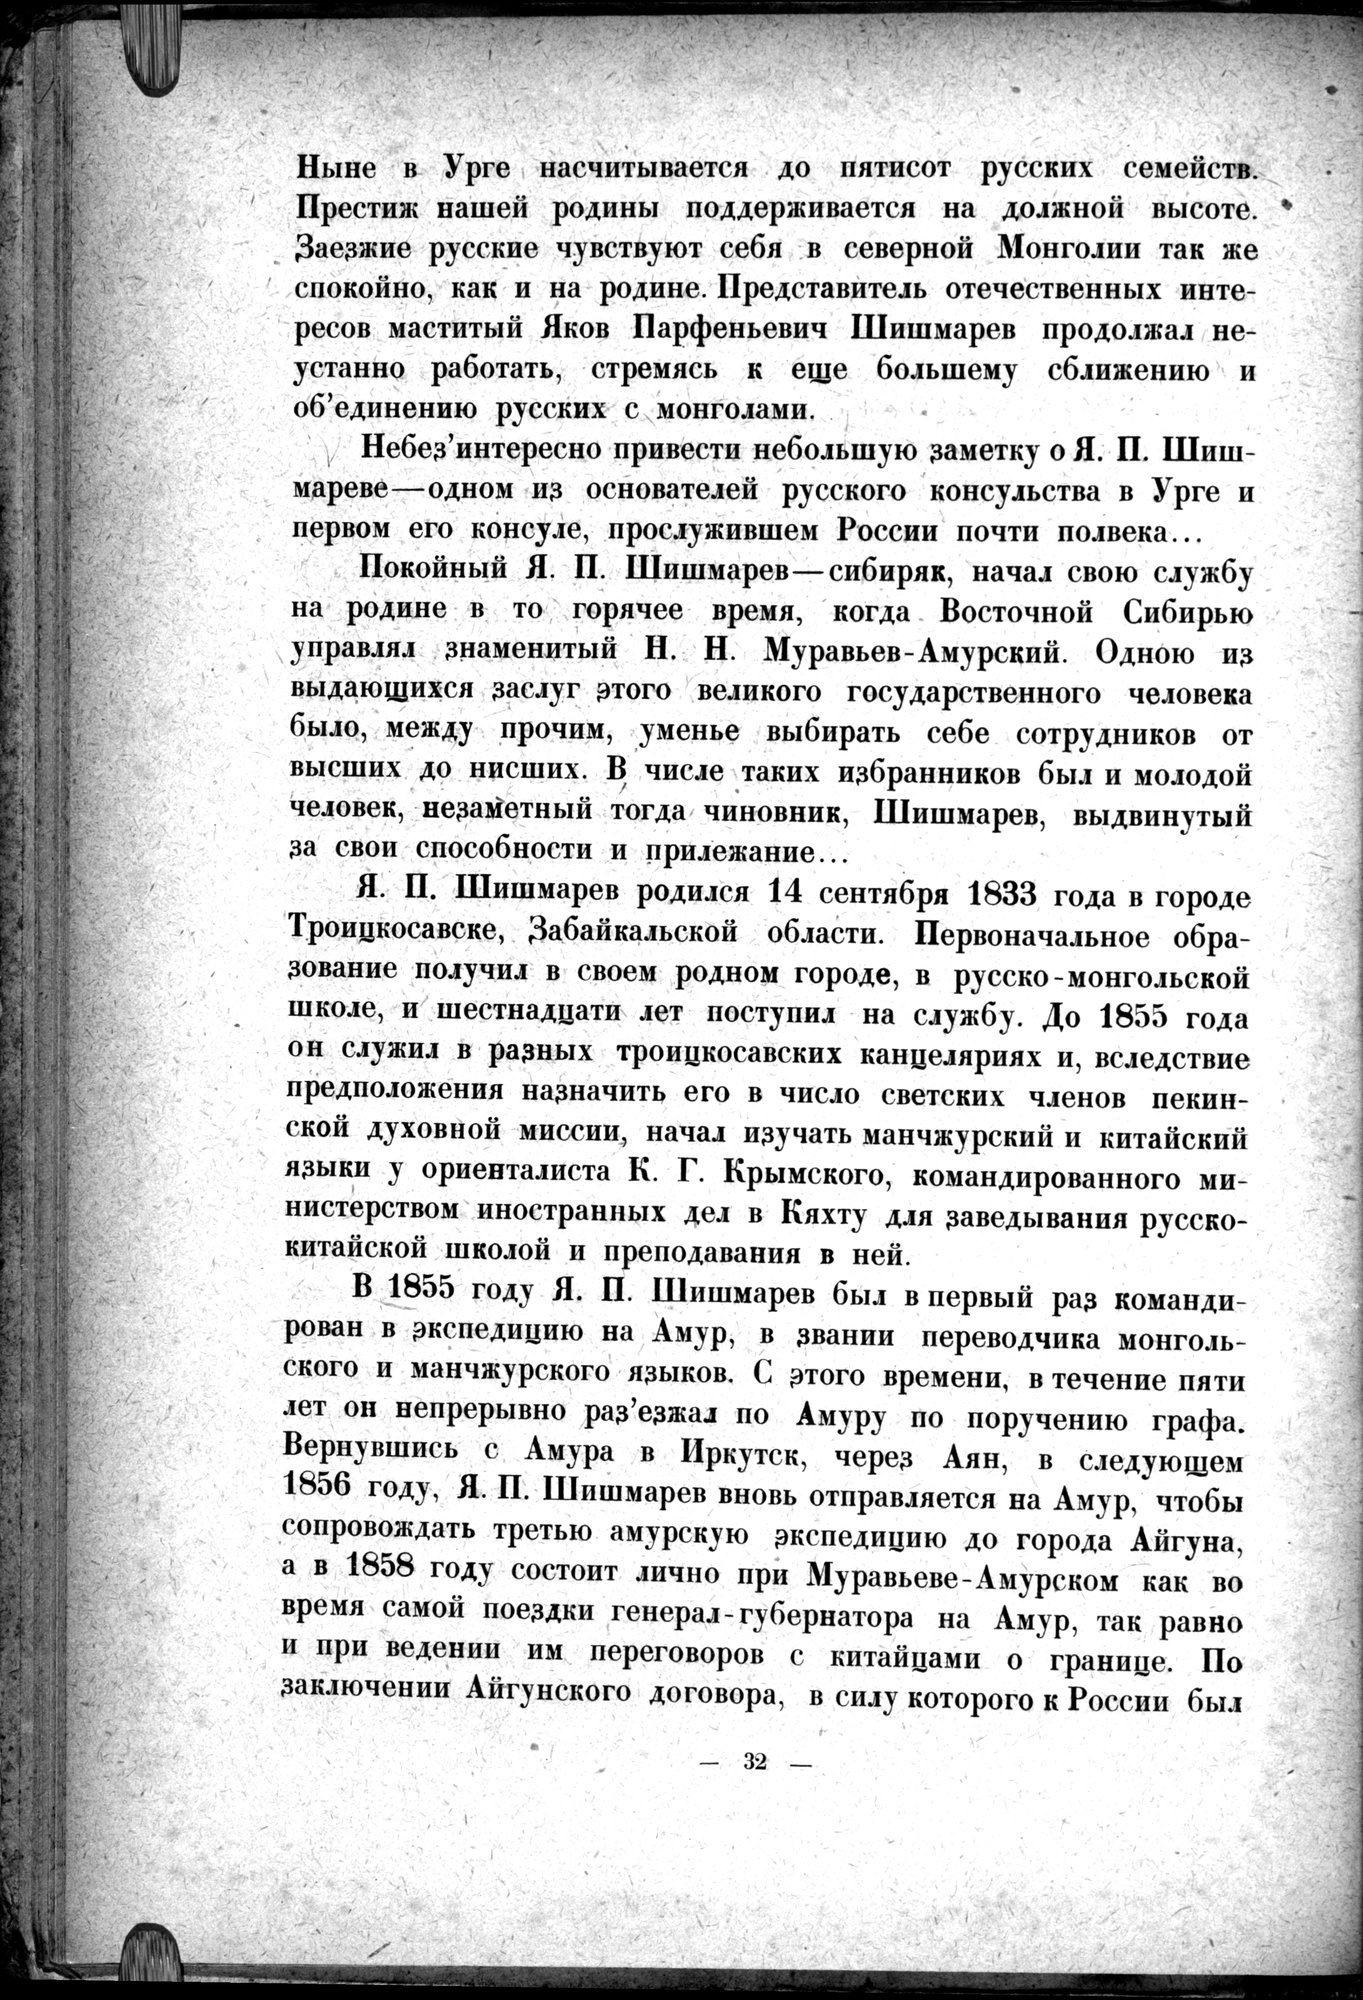 Mongoliya i Amdo i mertby gorod Khara-Khoto : vol.1 / Page 52 (Grayscale High Resolution Image)